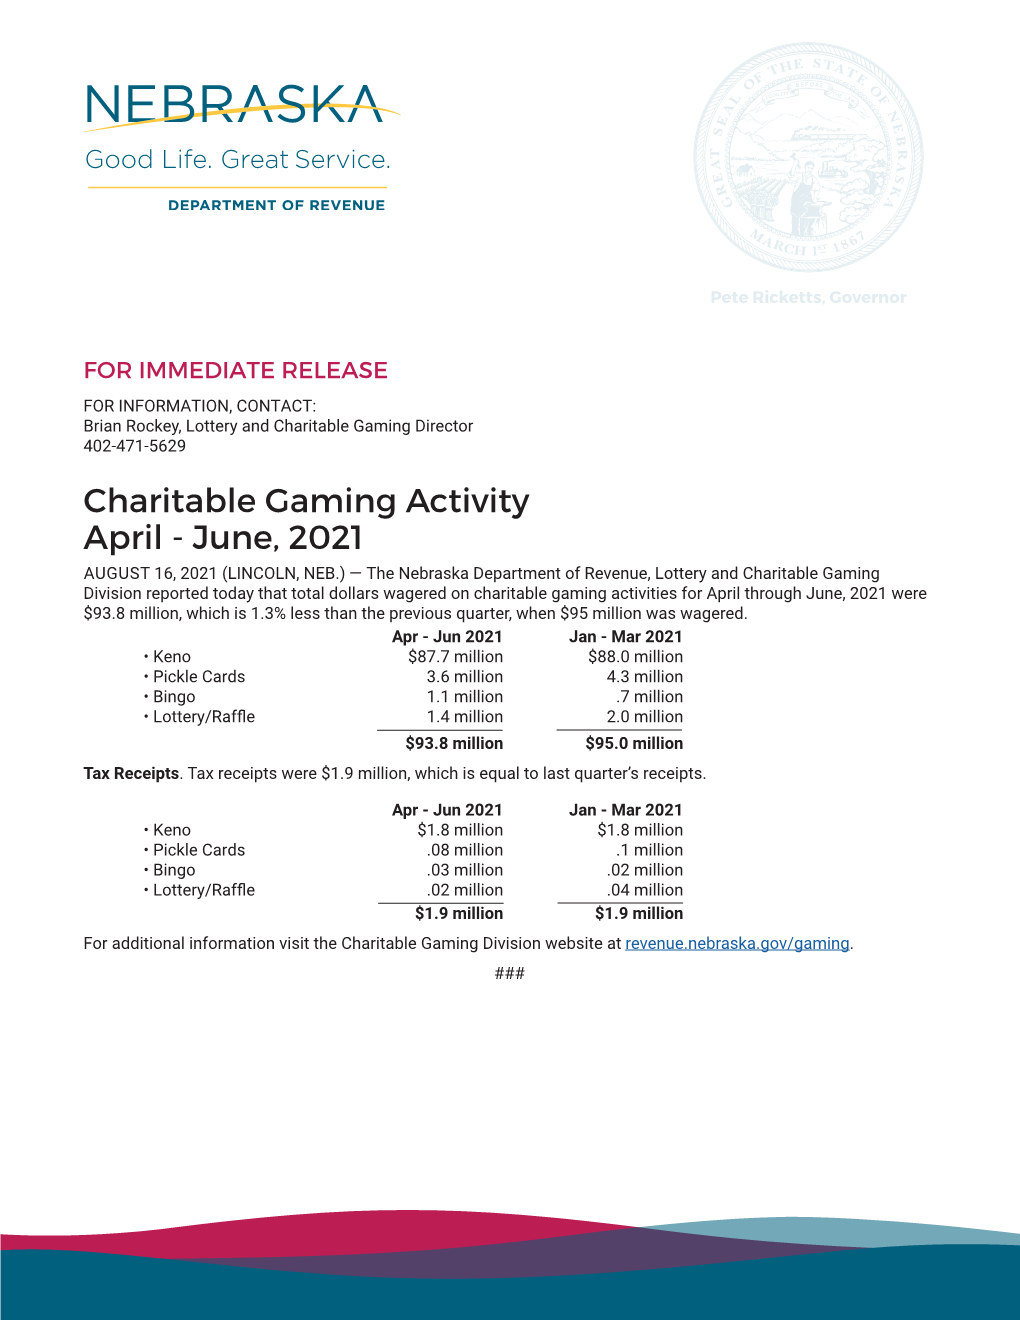 Charitable Gaming Activity April